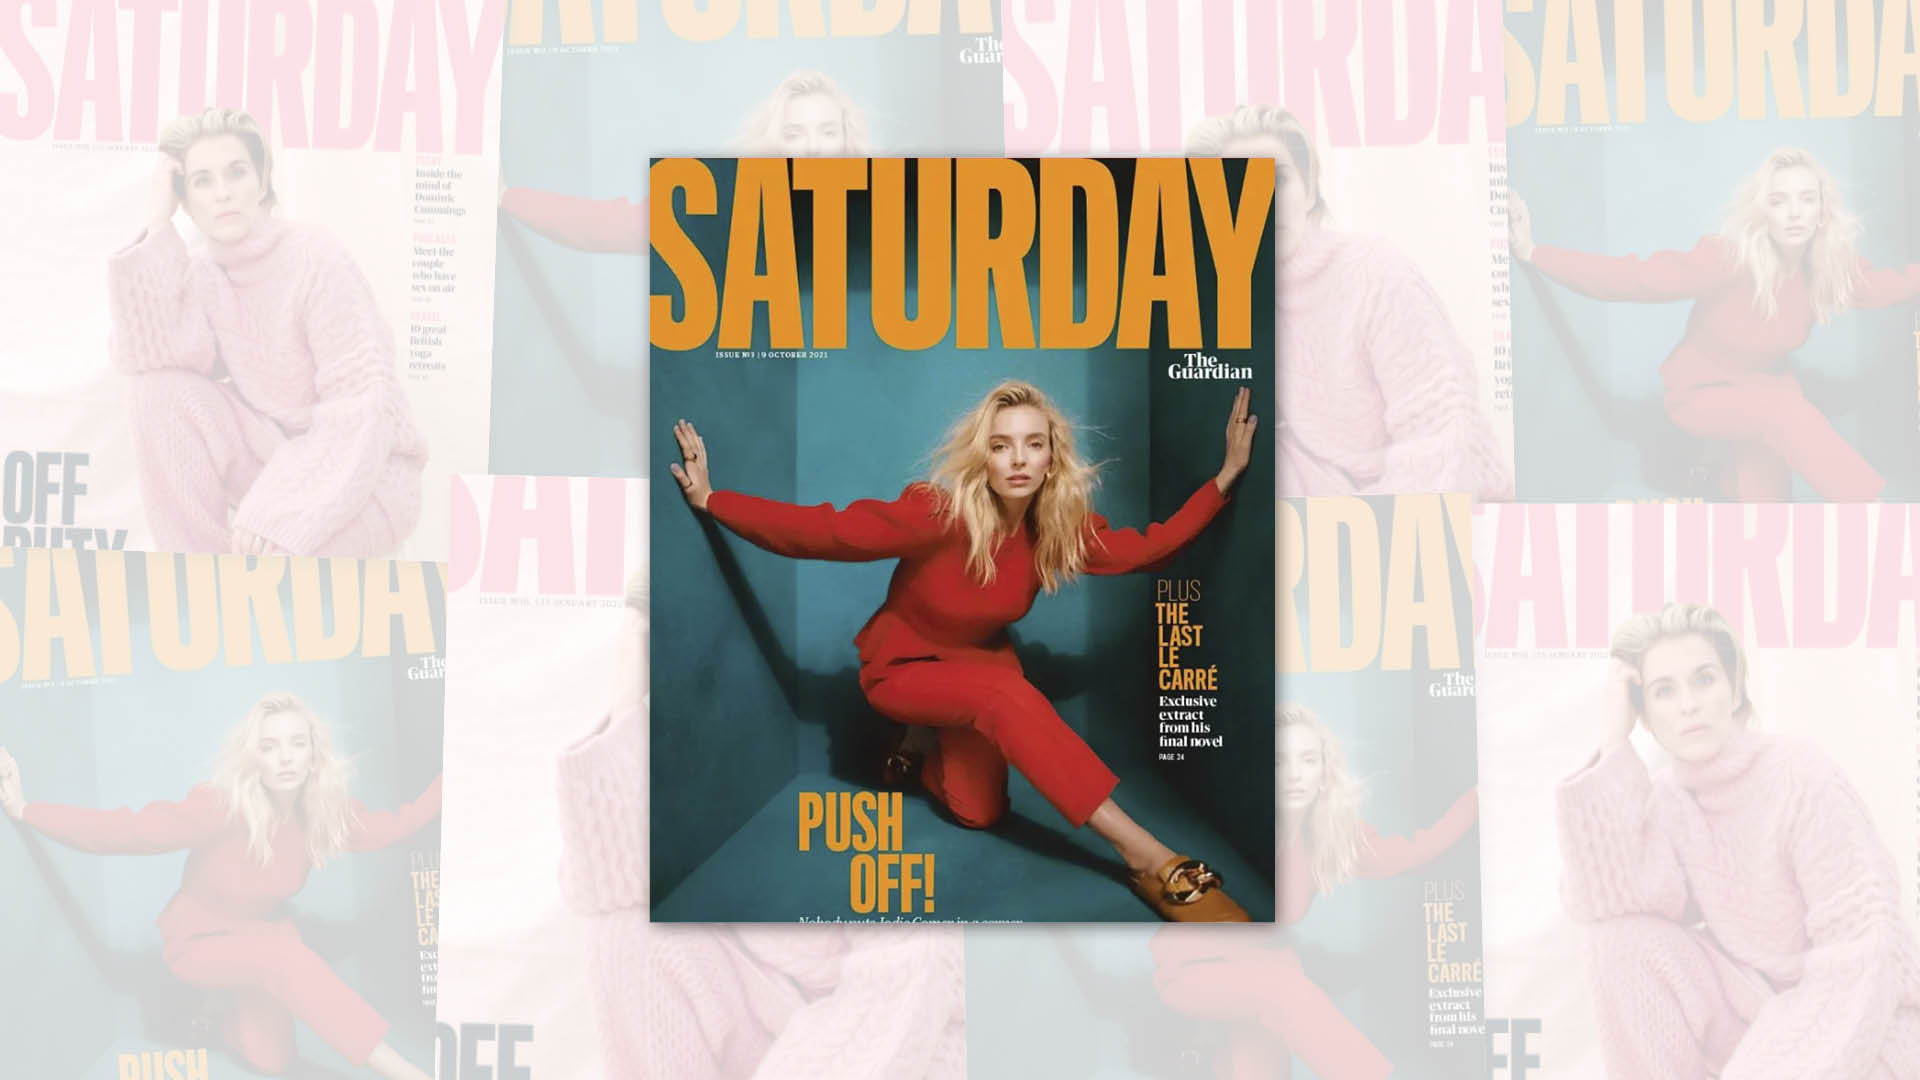 The Guardian – Saturday magazine